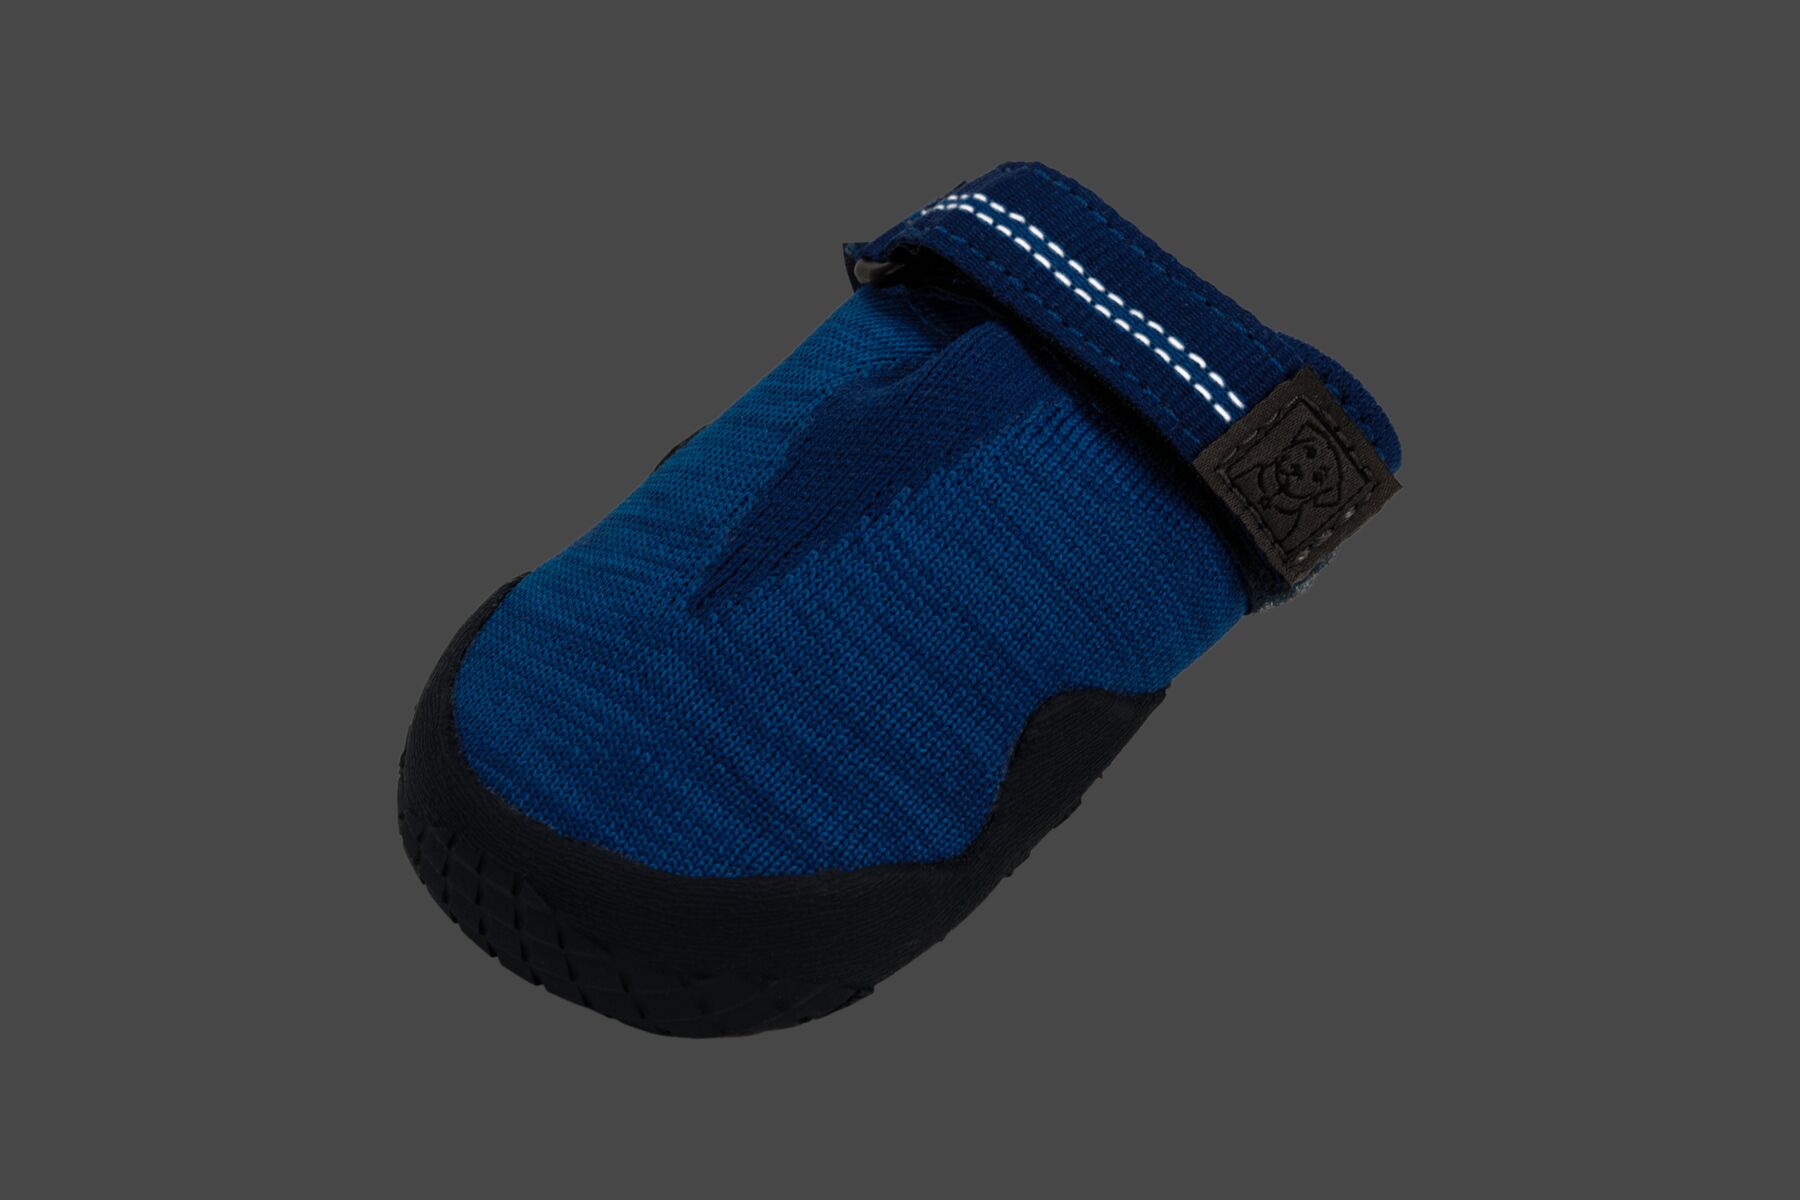 RuffWear Hi & Light™ Trail Shoes - set of 2 - Blue Pool